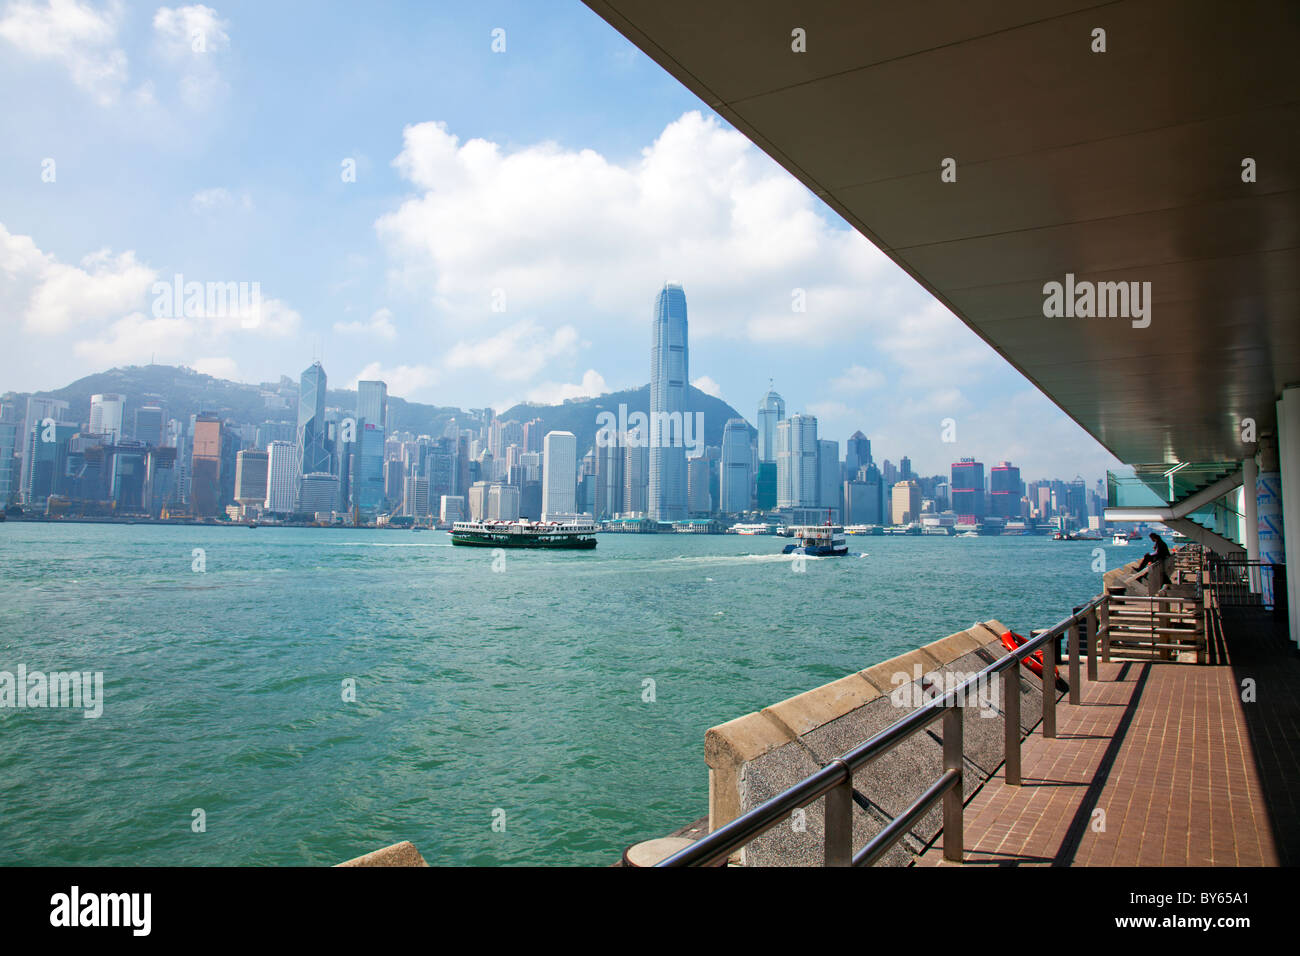 Anzeigen der Hong Kong Skyline von Kowloon Harbour City Shopping mall Stockfoto